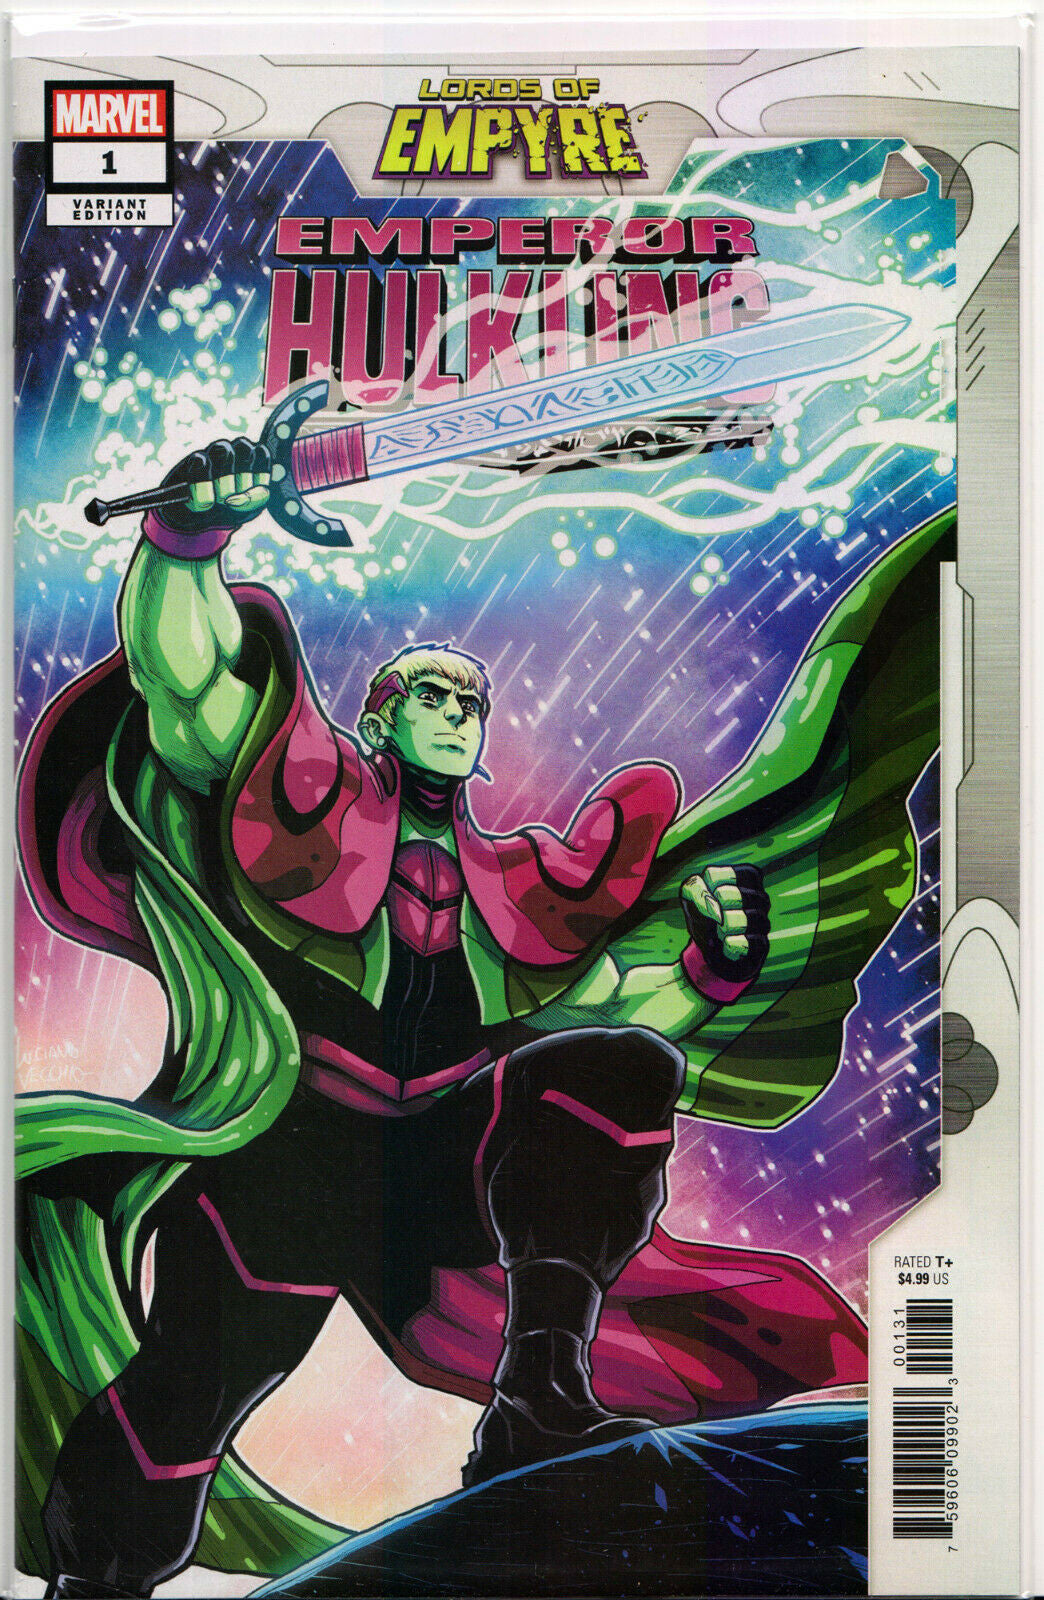 LORDS OF EMPYRE: EMPEROR HULKLING #1 (VECCHIO VARIANT) Comic ~ Marvel Comics